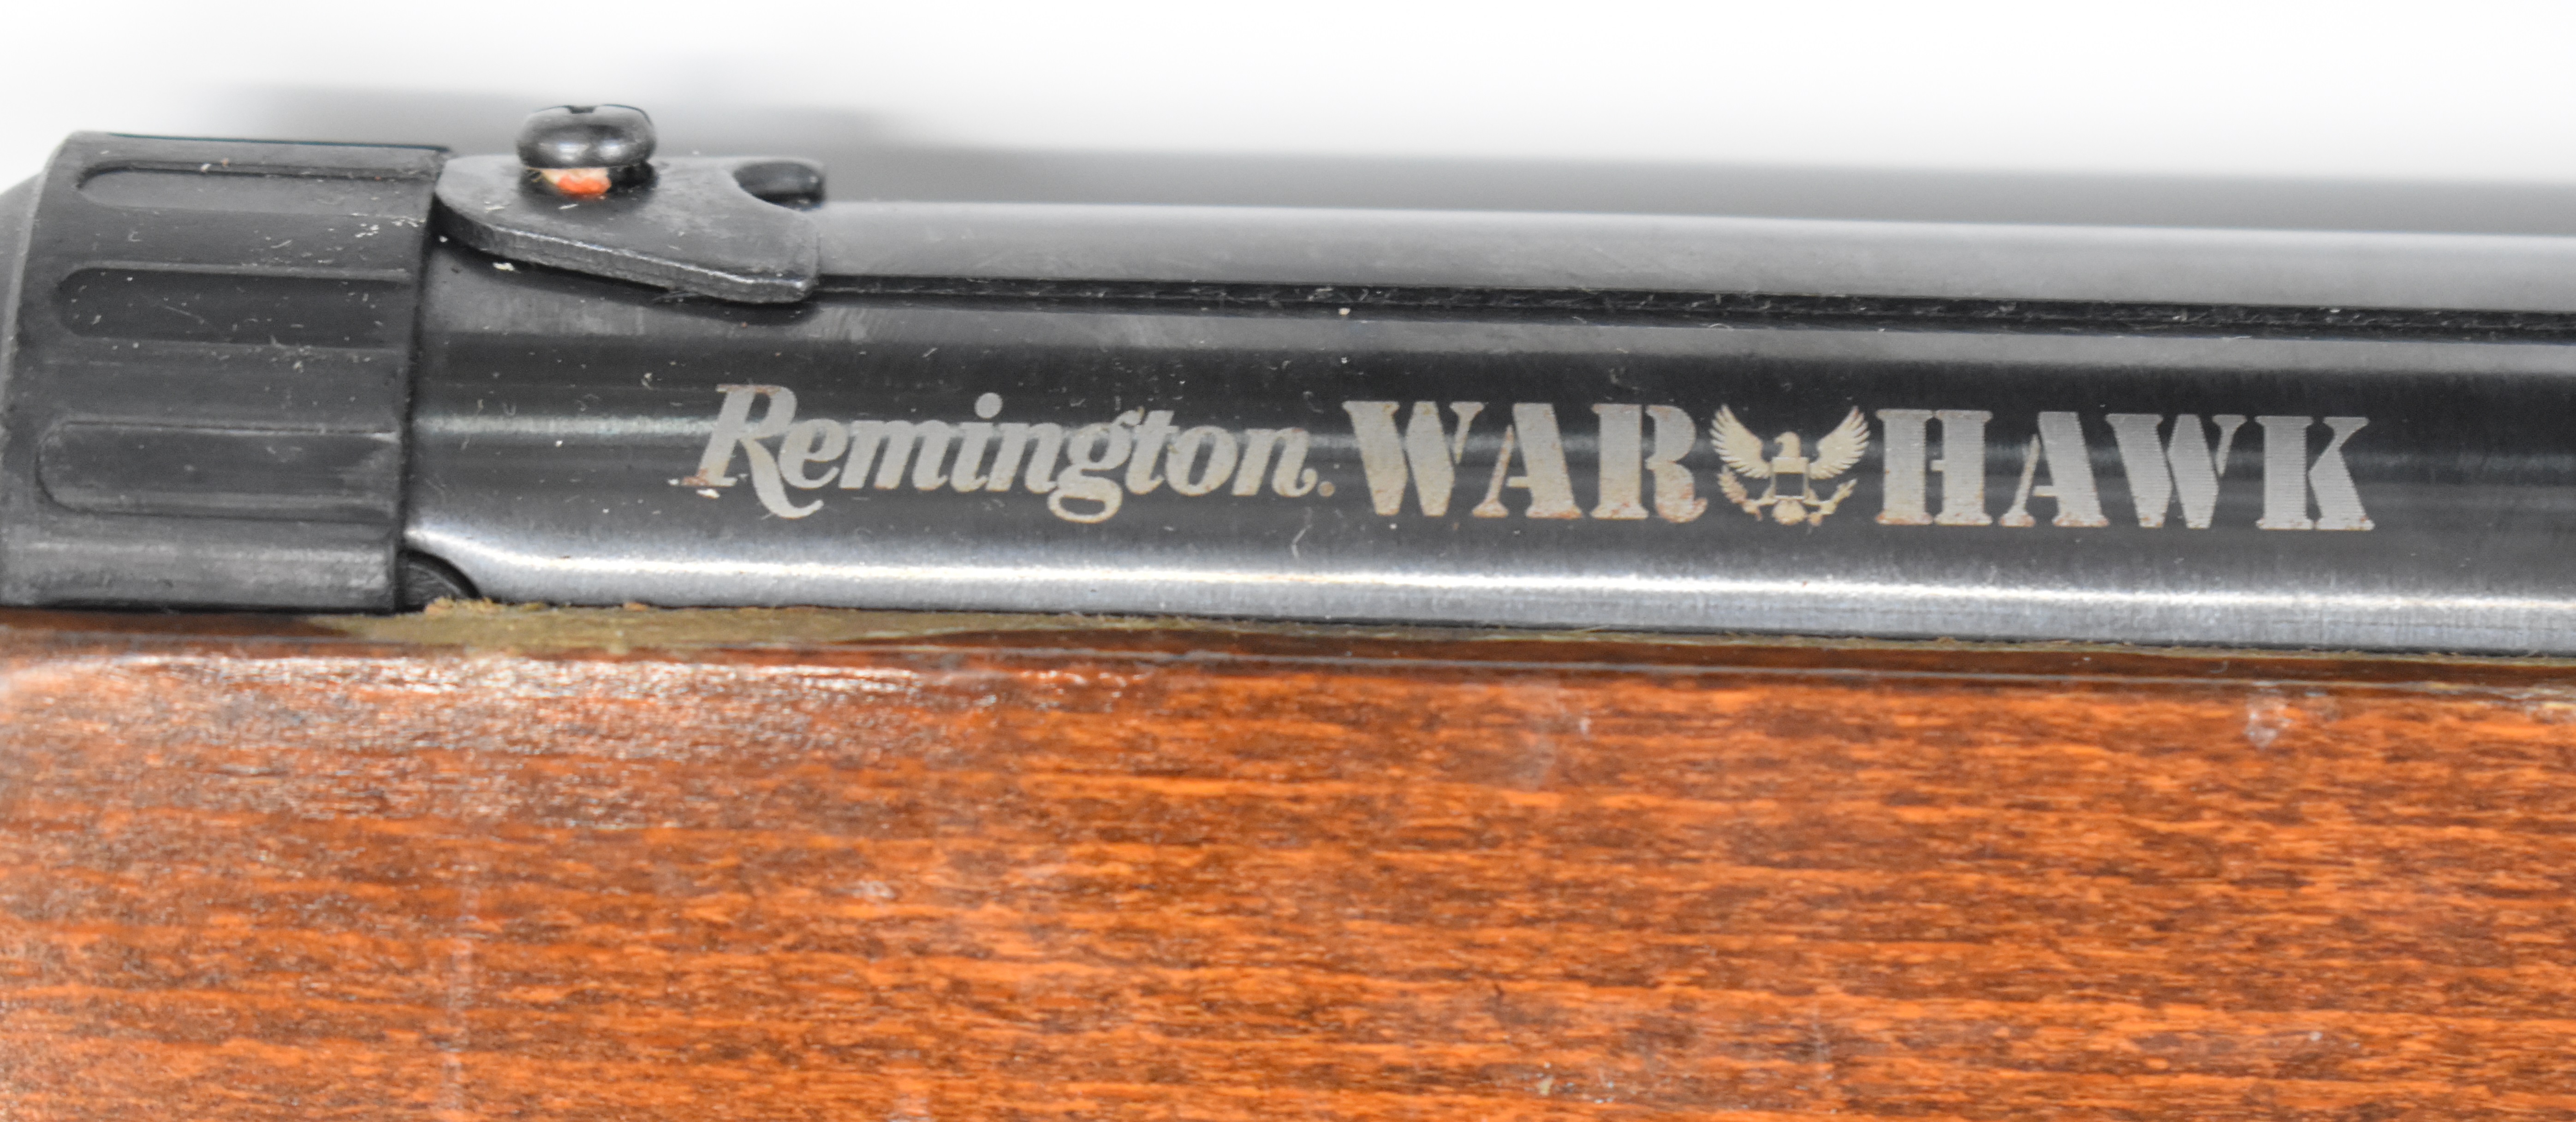 Remington Warhawk .177 under-lever air rifle with textured semi-pistol grip, raised cheek piece - Image 6 of 11